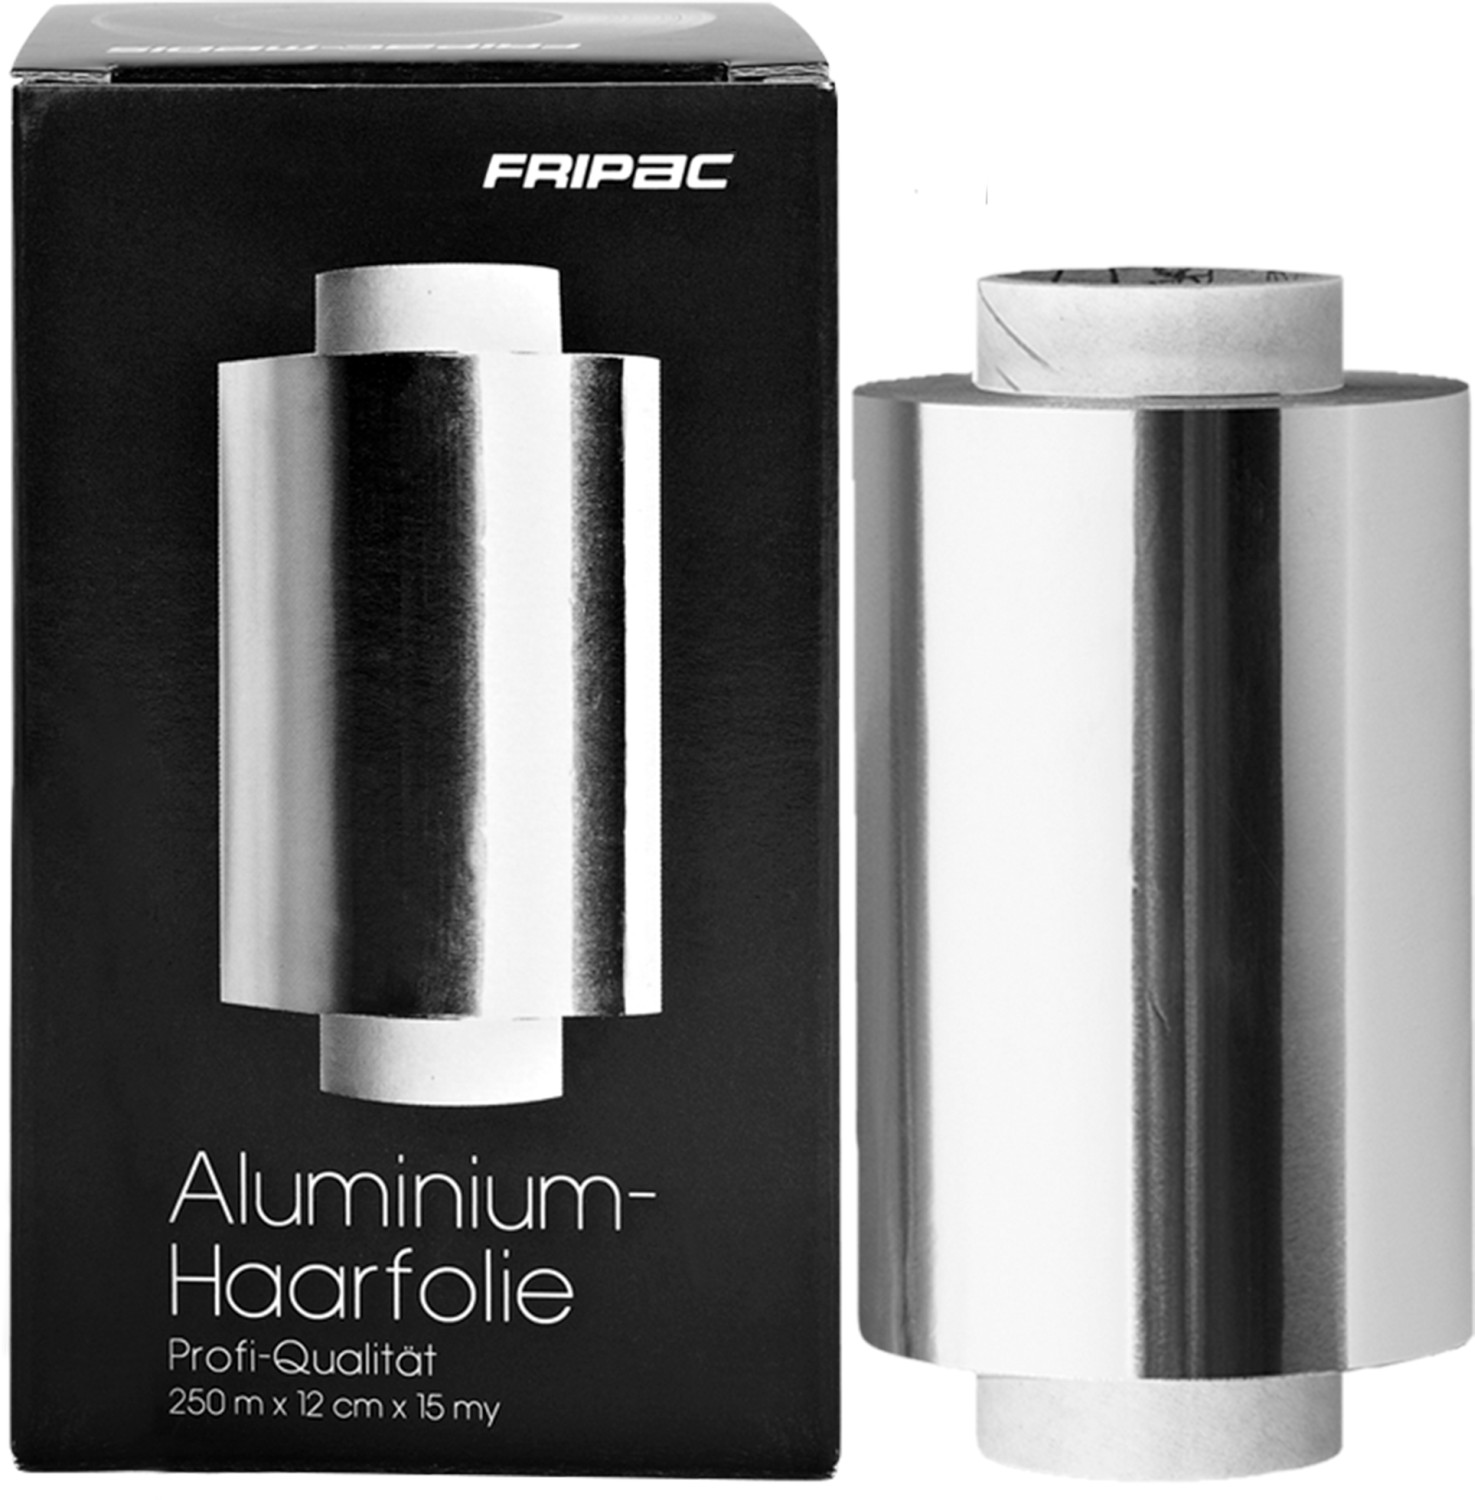  Fripac-Medis Rouleaux Aluminium  250 m x 12 cm, 15 my 